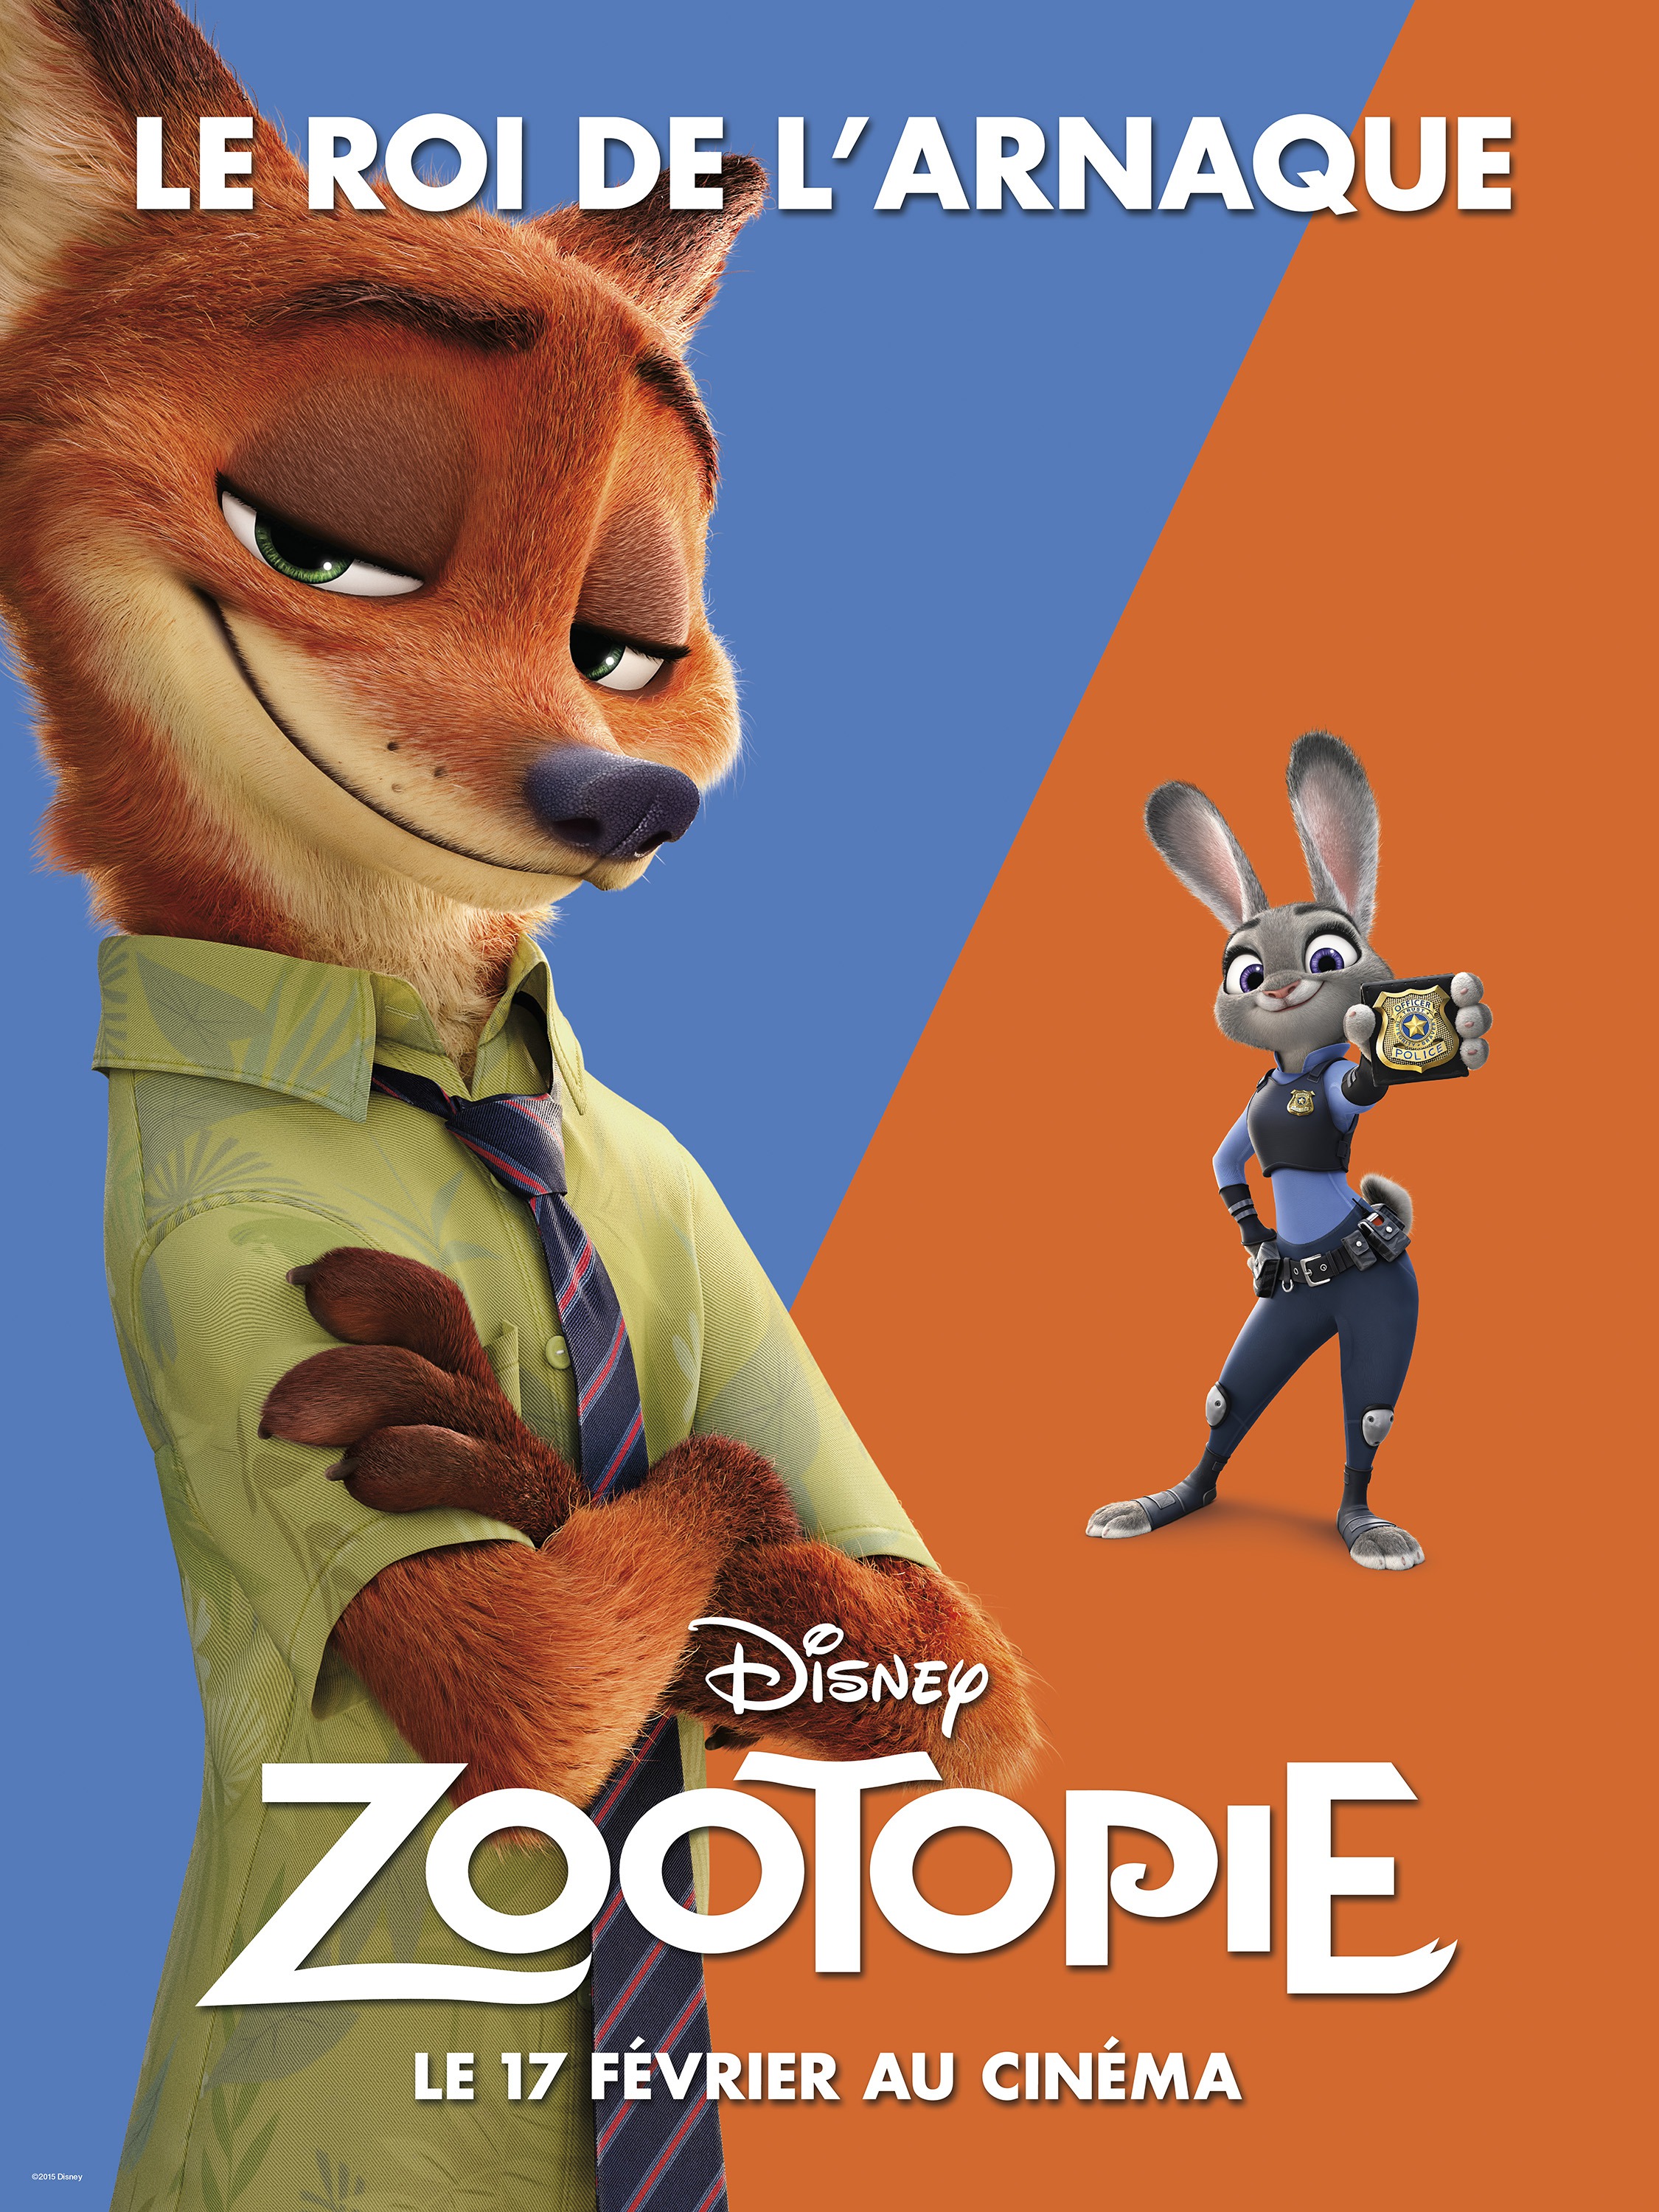 Mega Sized Movie Poster Image for Zootopia (#19 of 29)